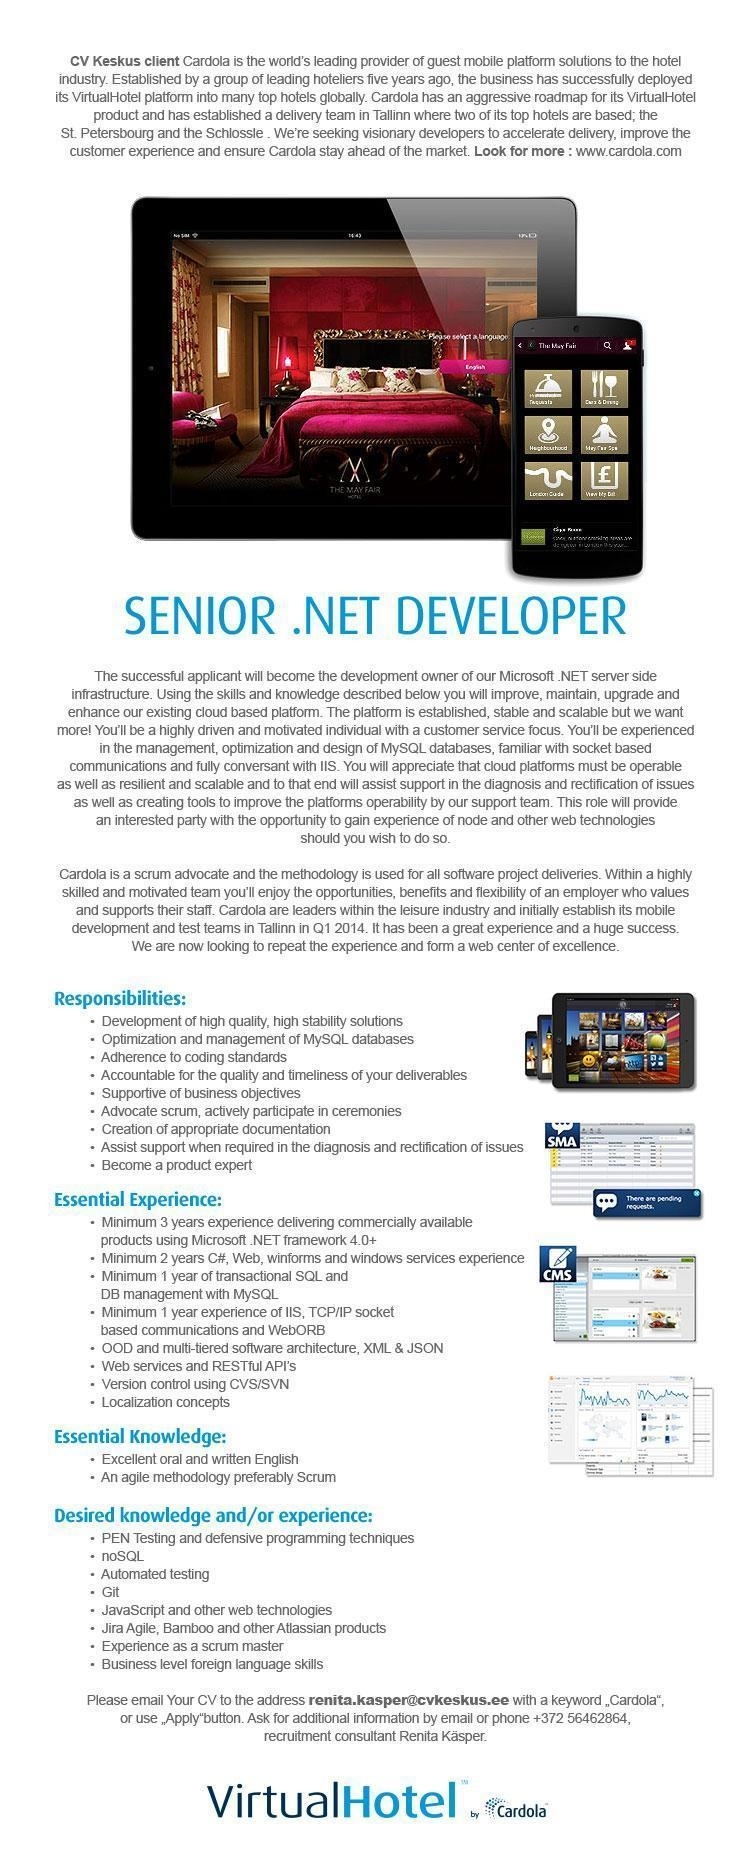 CV KESKUS OÜ Cardola is looking for senior .NET developer